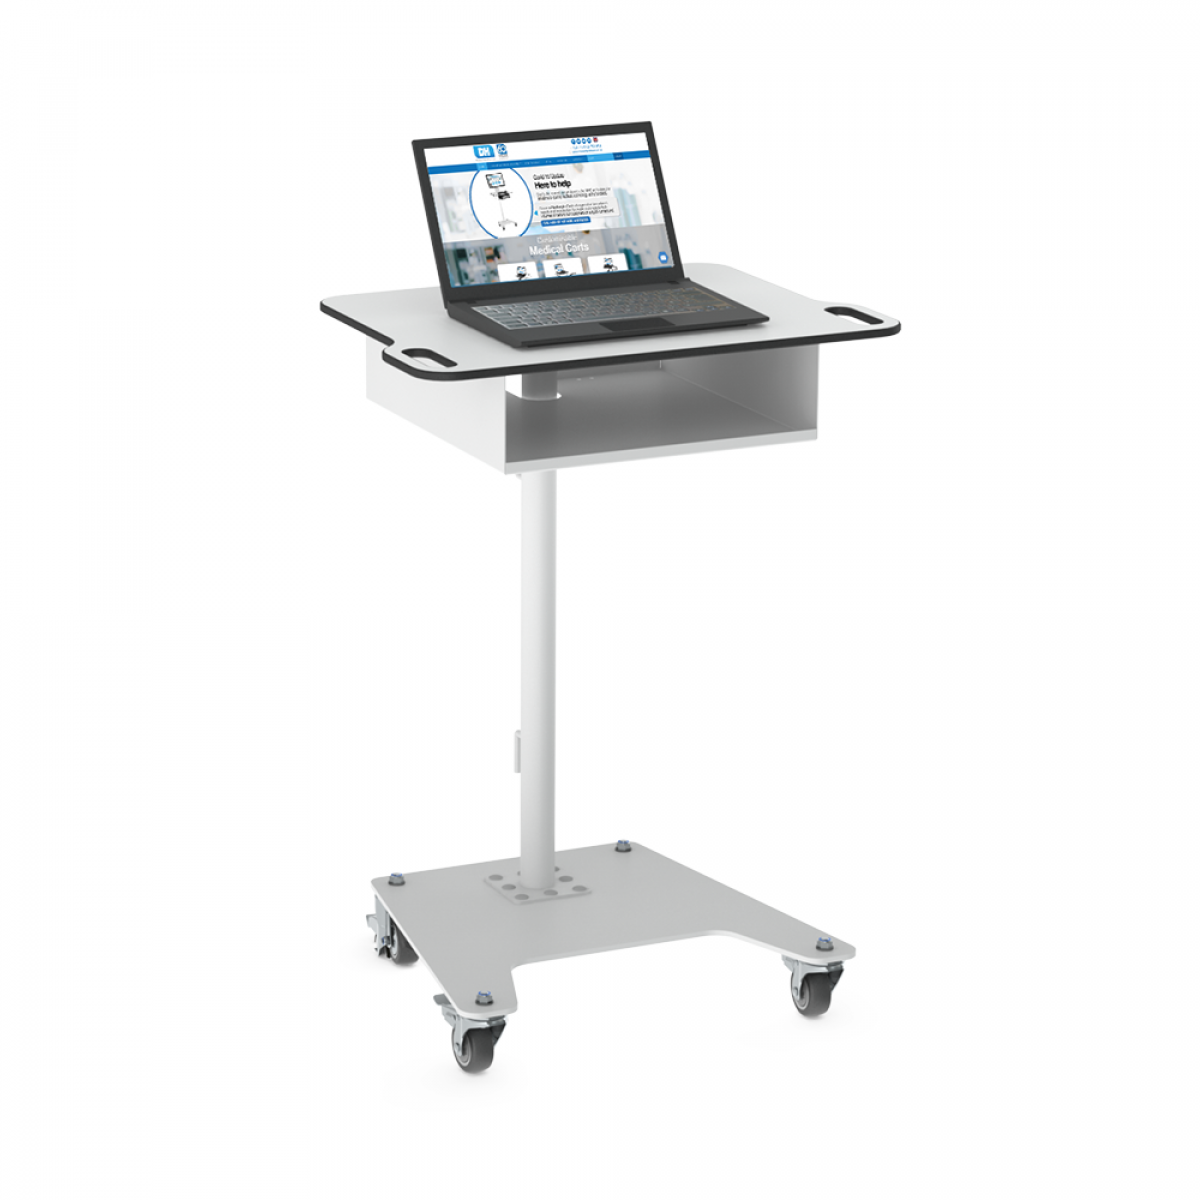 Dalen Healthcare's Nightingale Cart for laptops & PCs